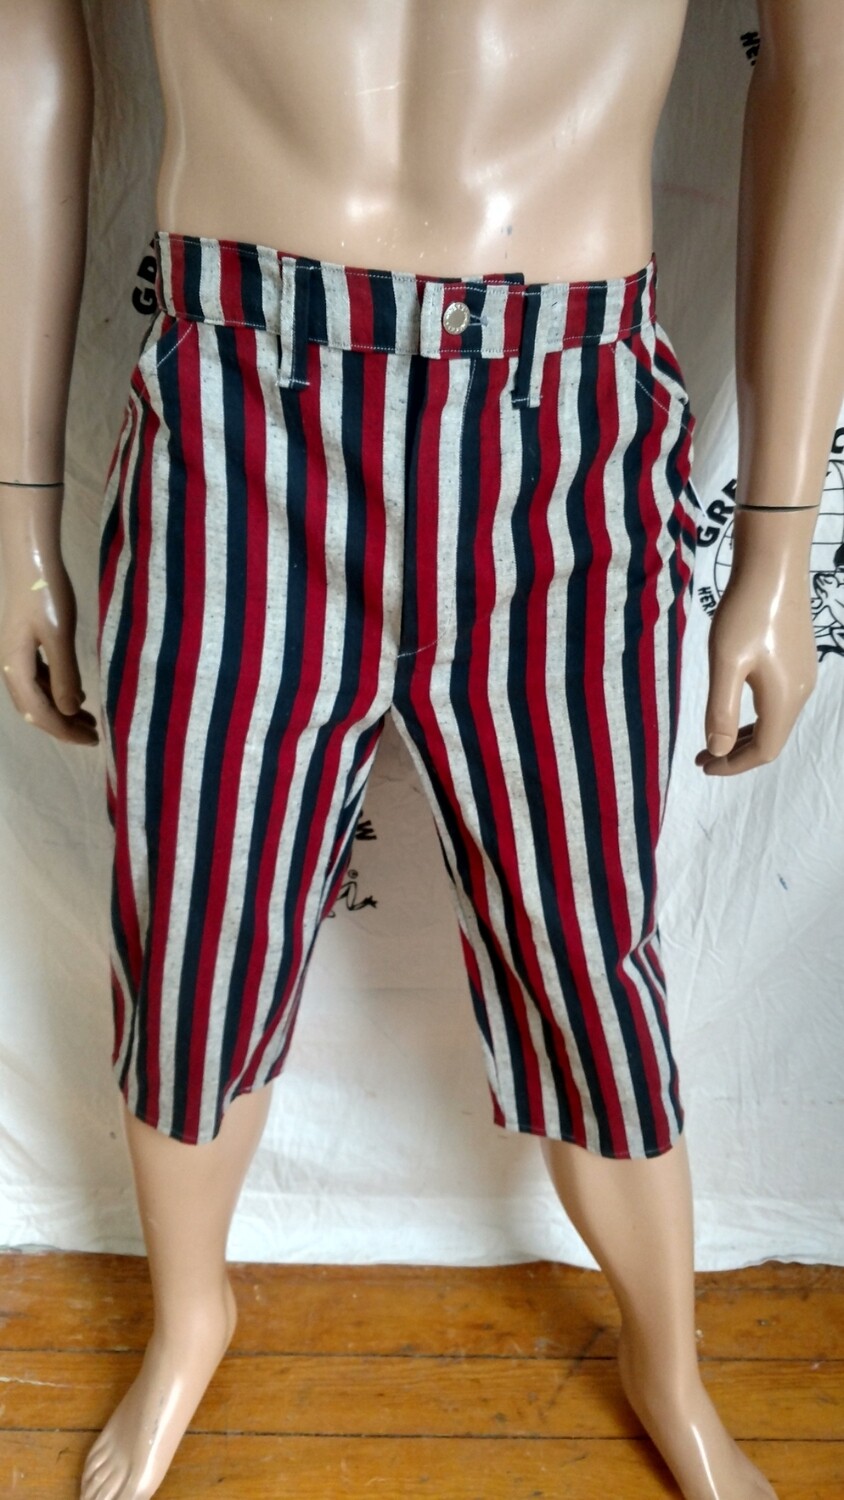 Hermans Eco Shorts pants Striped 36 x 18 Jeans USA